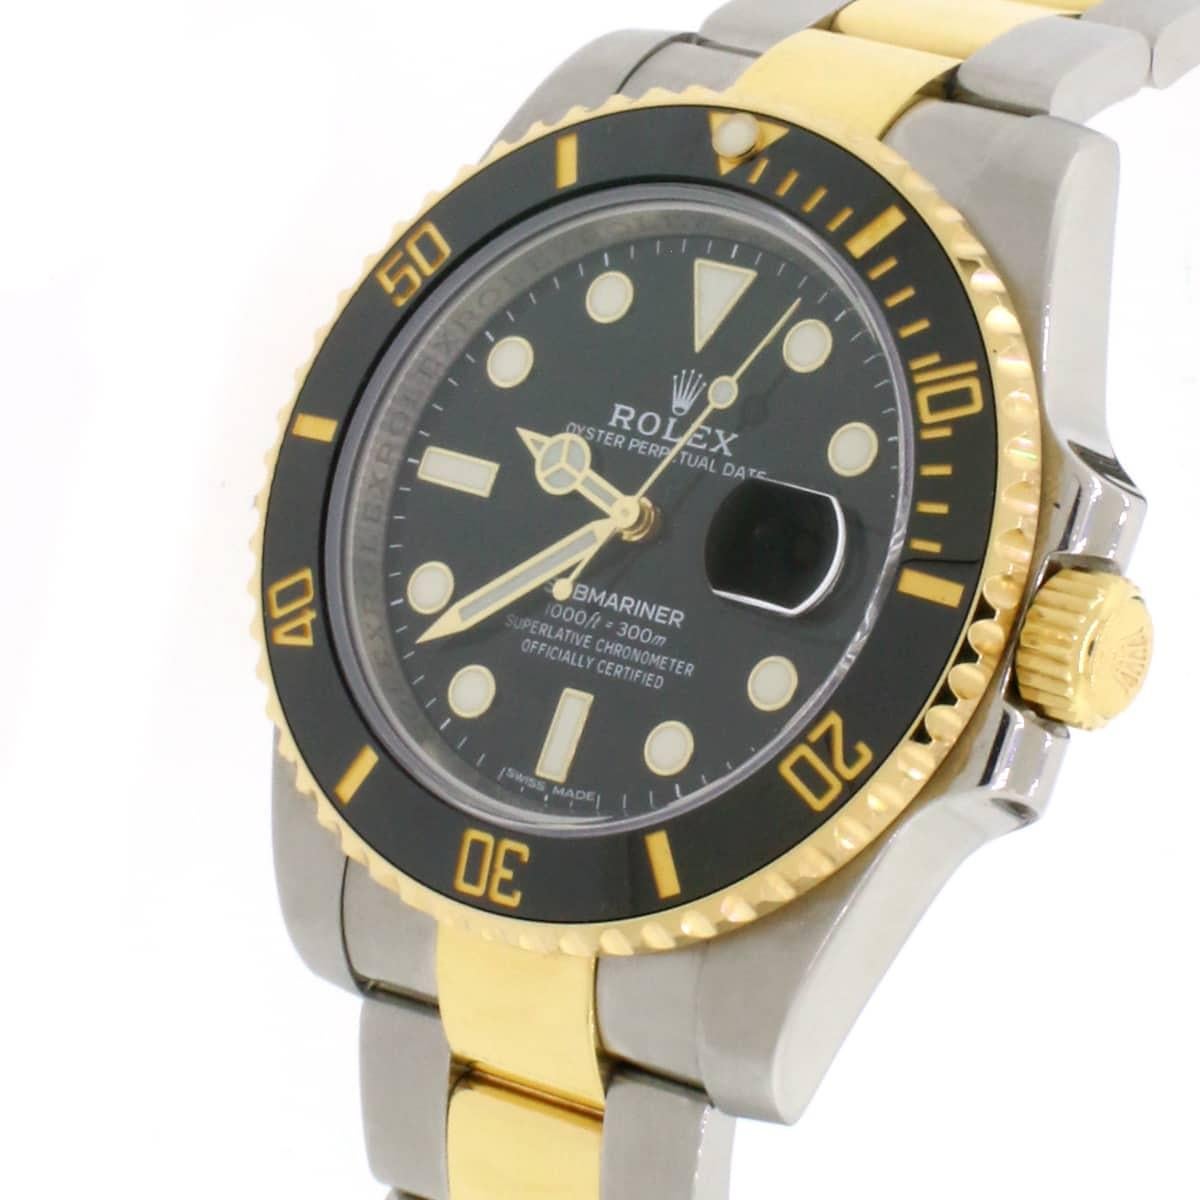 Rolex Submariner Gold/Steel Ceramic Bezel Black Dial Watch 116613 For Sale 3